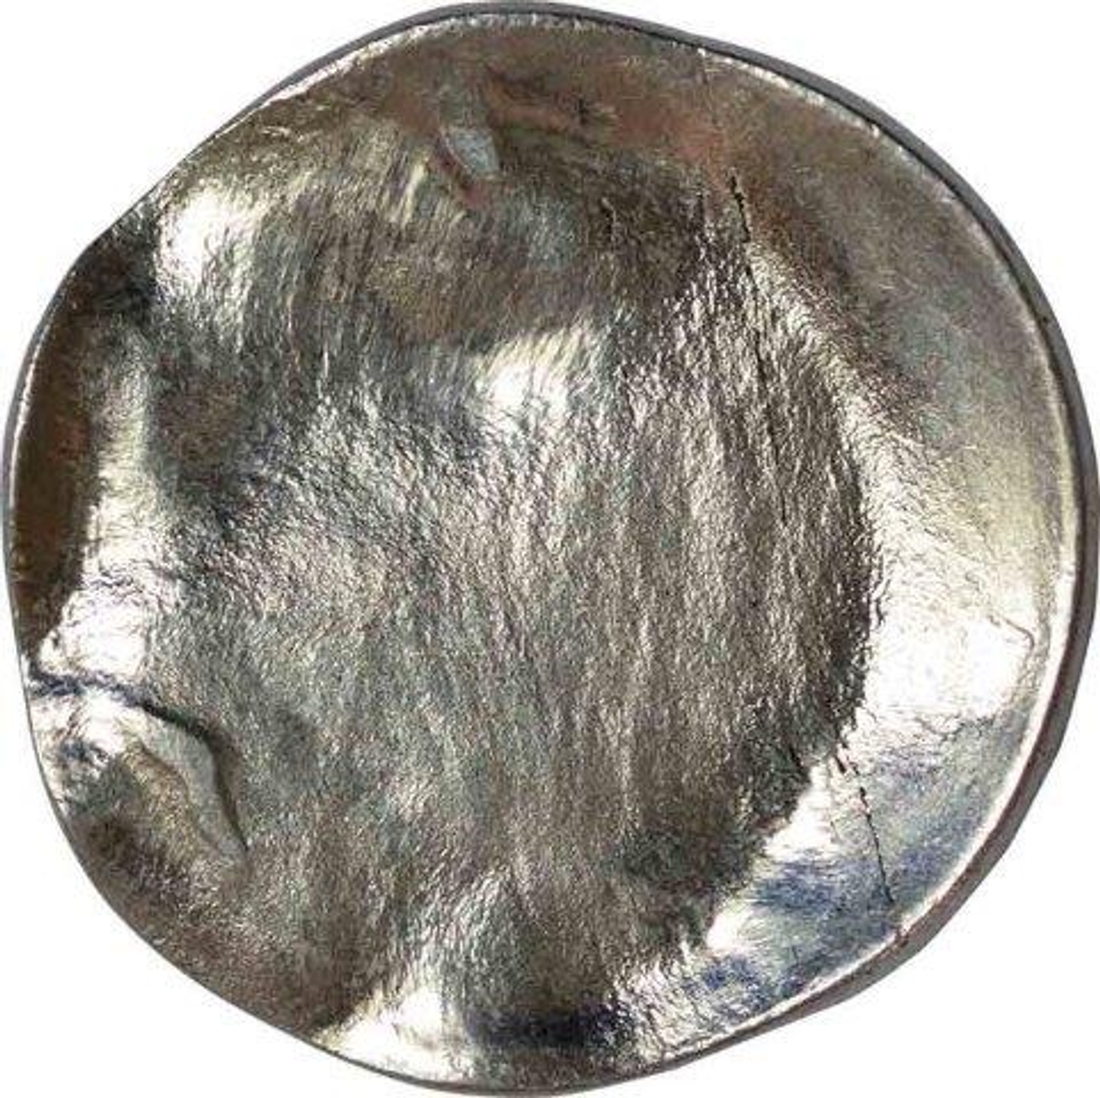 Steel Twenty five Paisa of Error coin of Republic India.